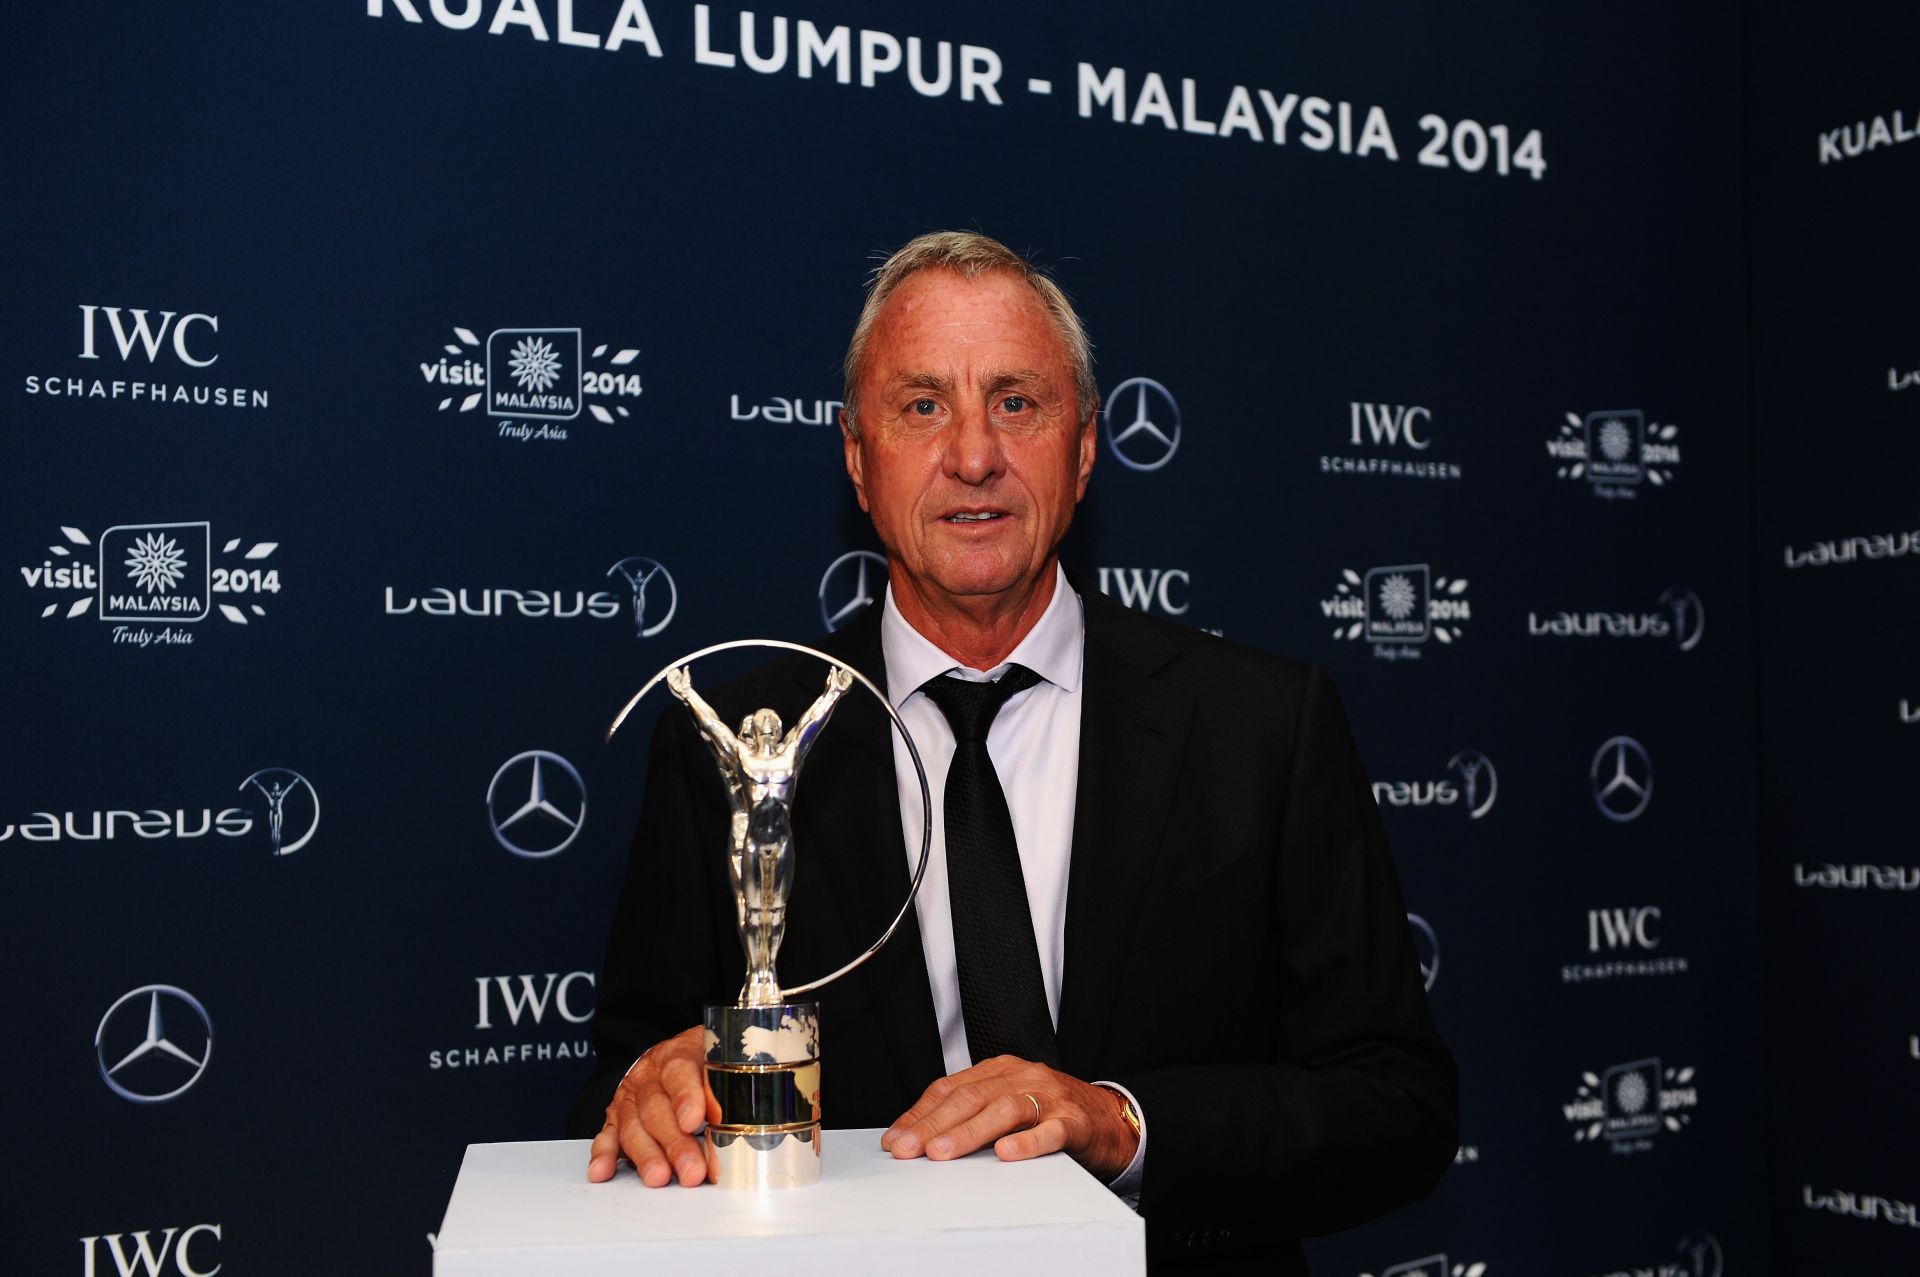 Johan Cruyff had a splendid career at the club level, claiming three Ballon d&#039;Or awards